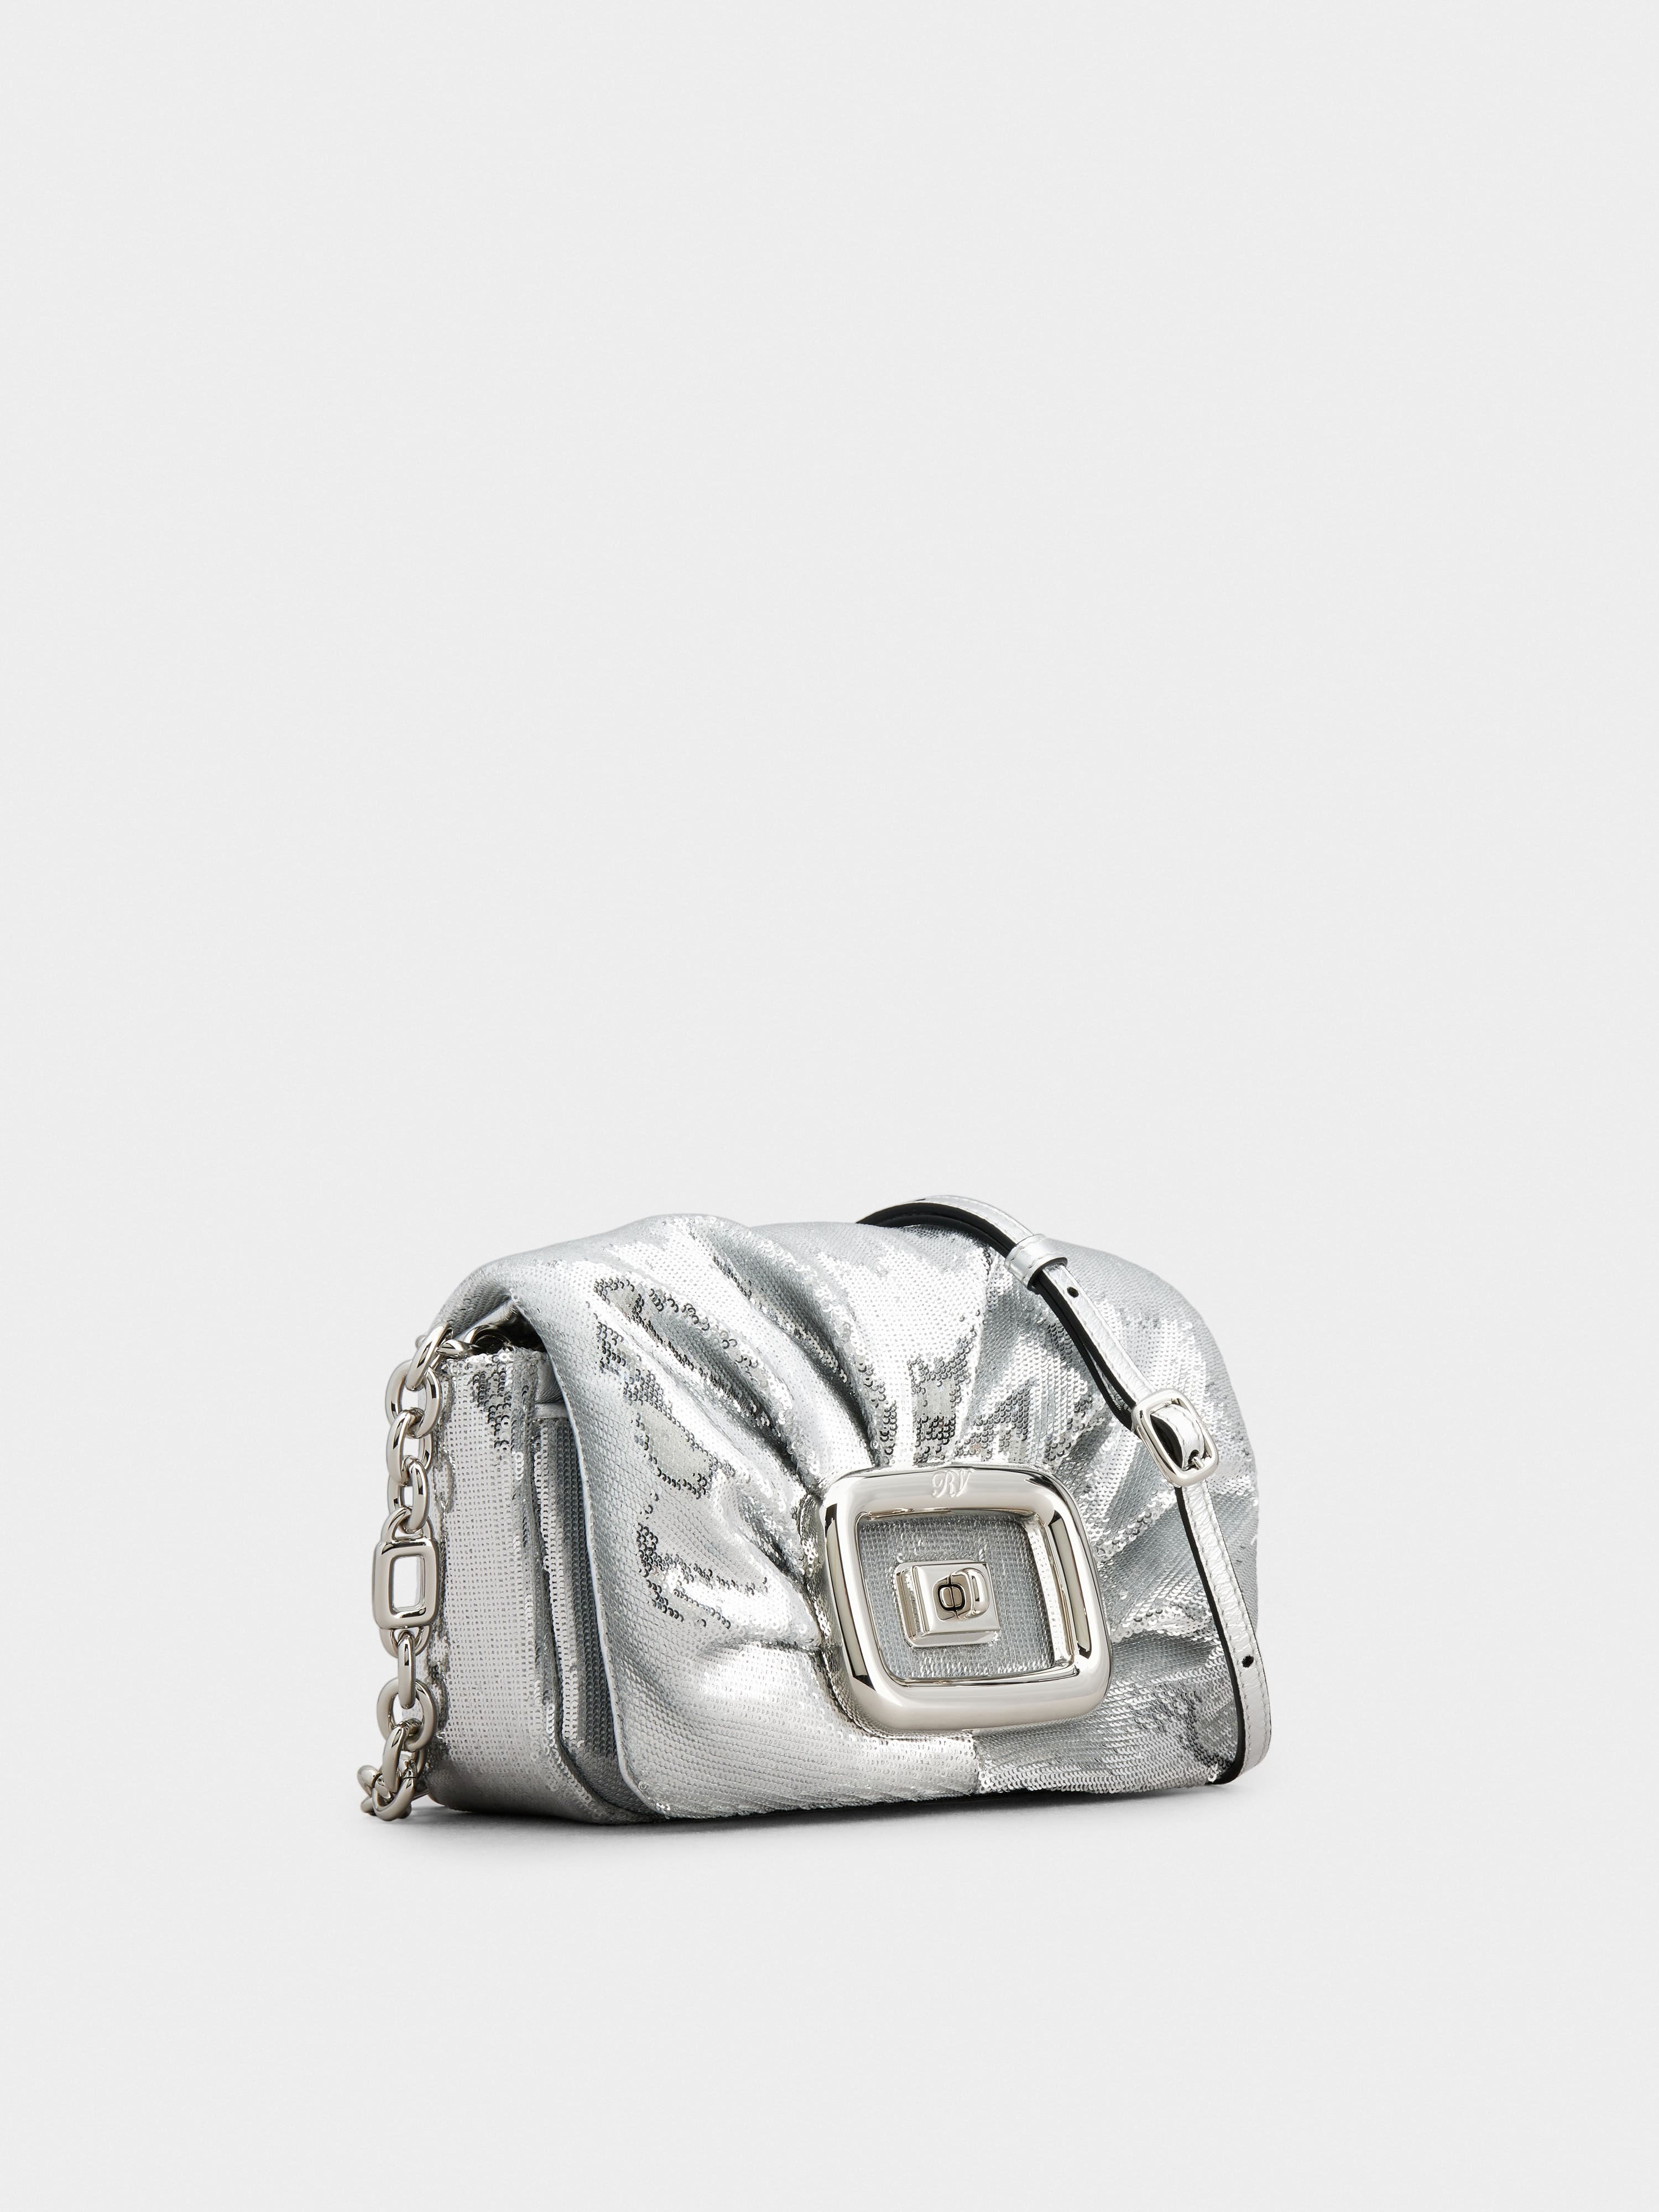 Viv' Choc Paillettes Mini Bag in Fabric - 3